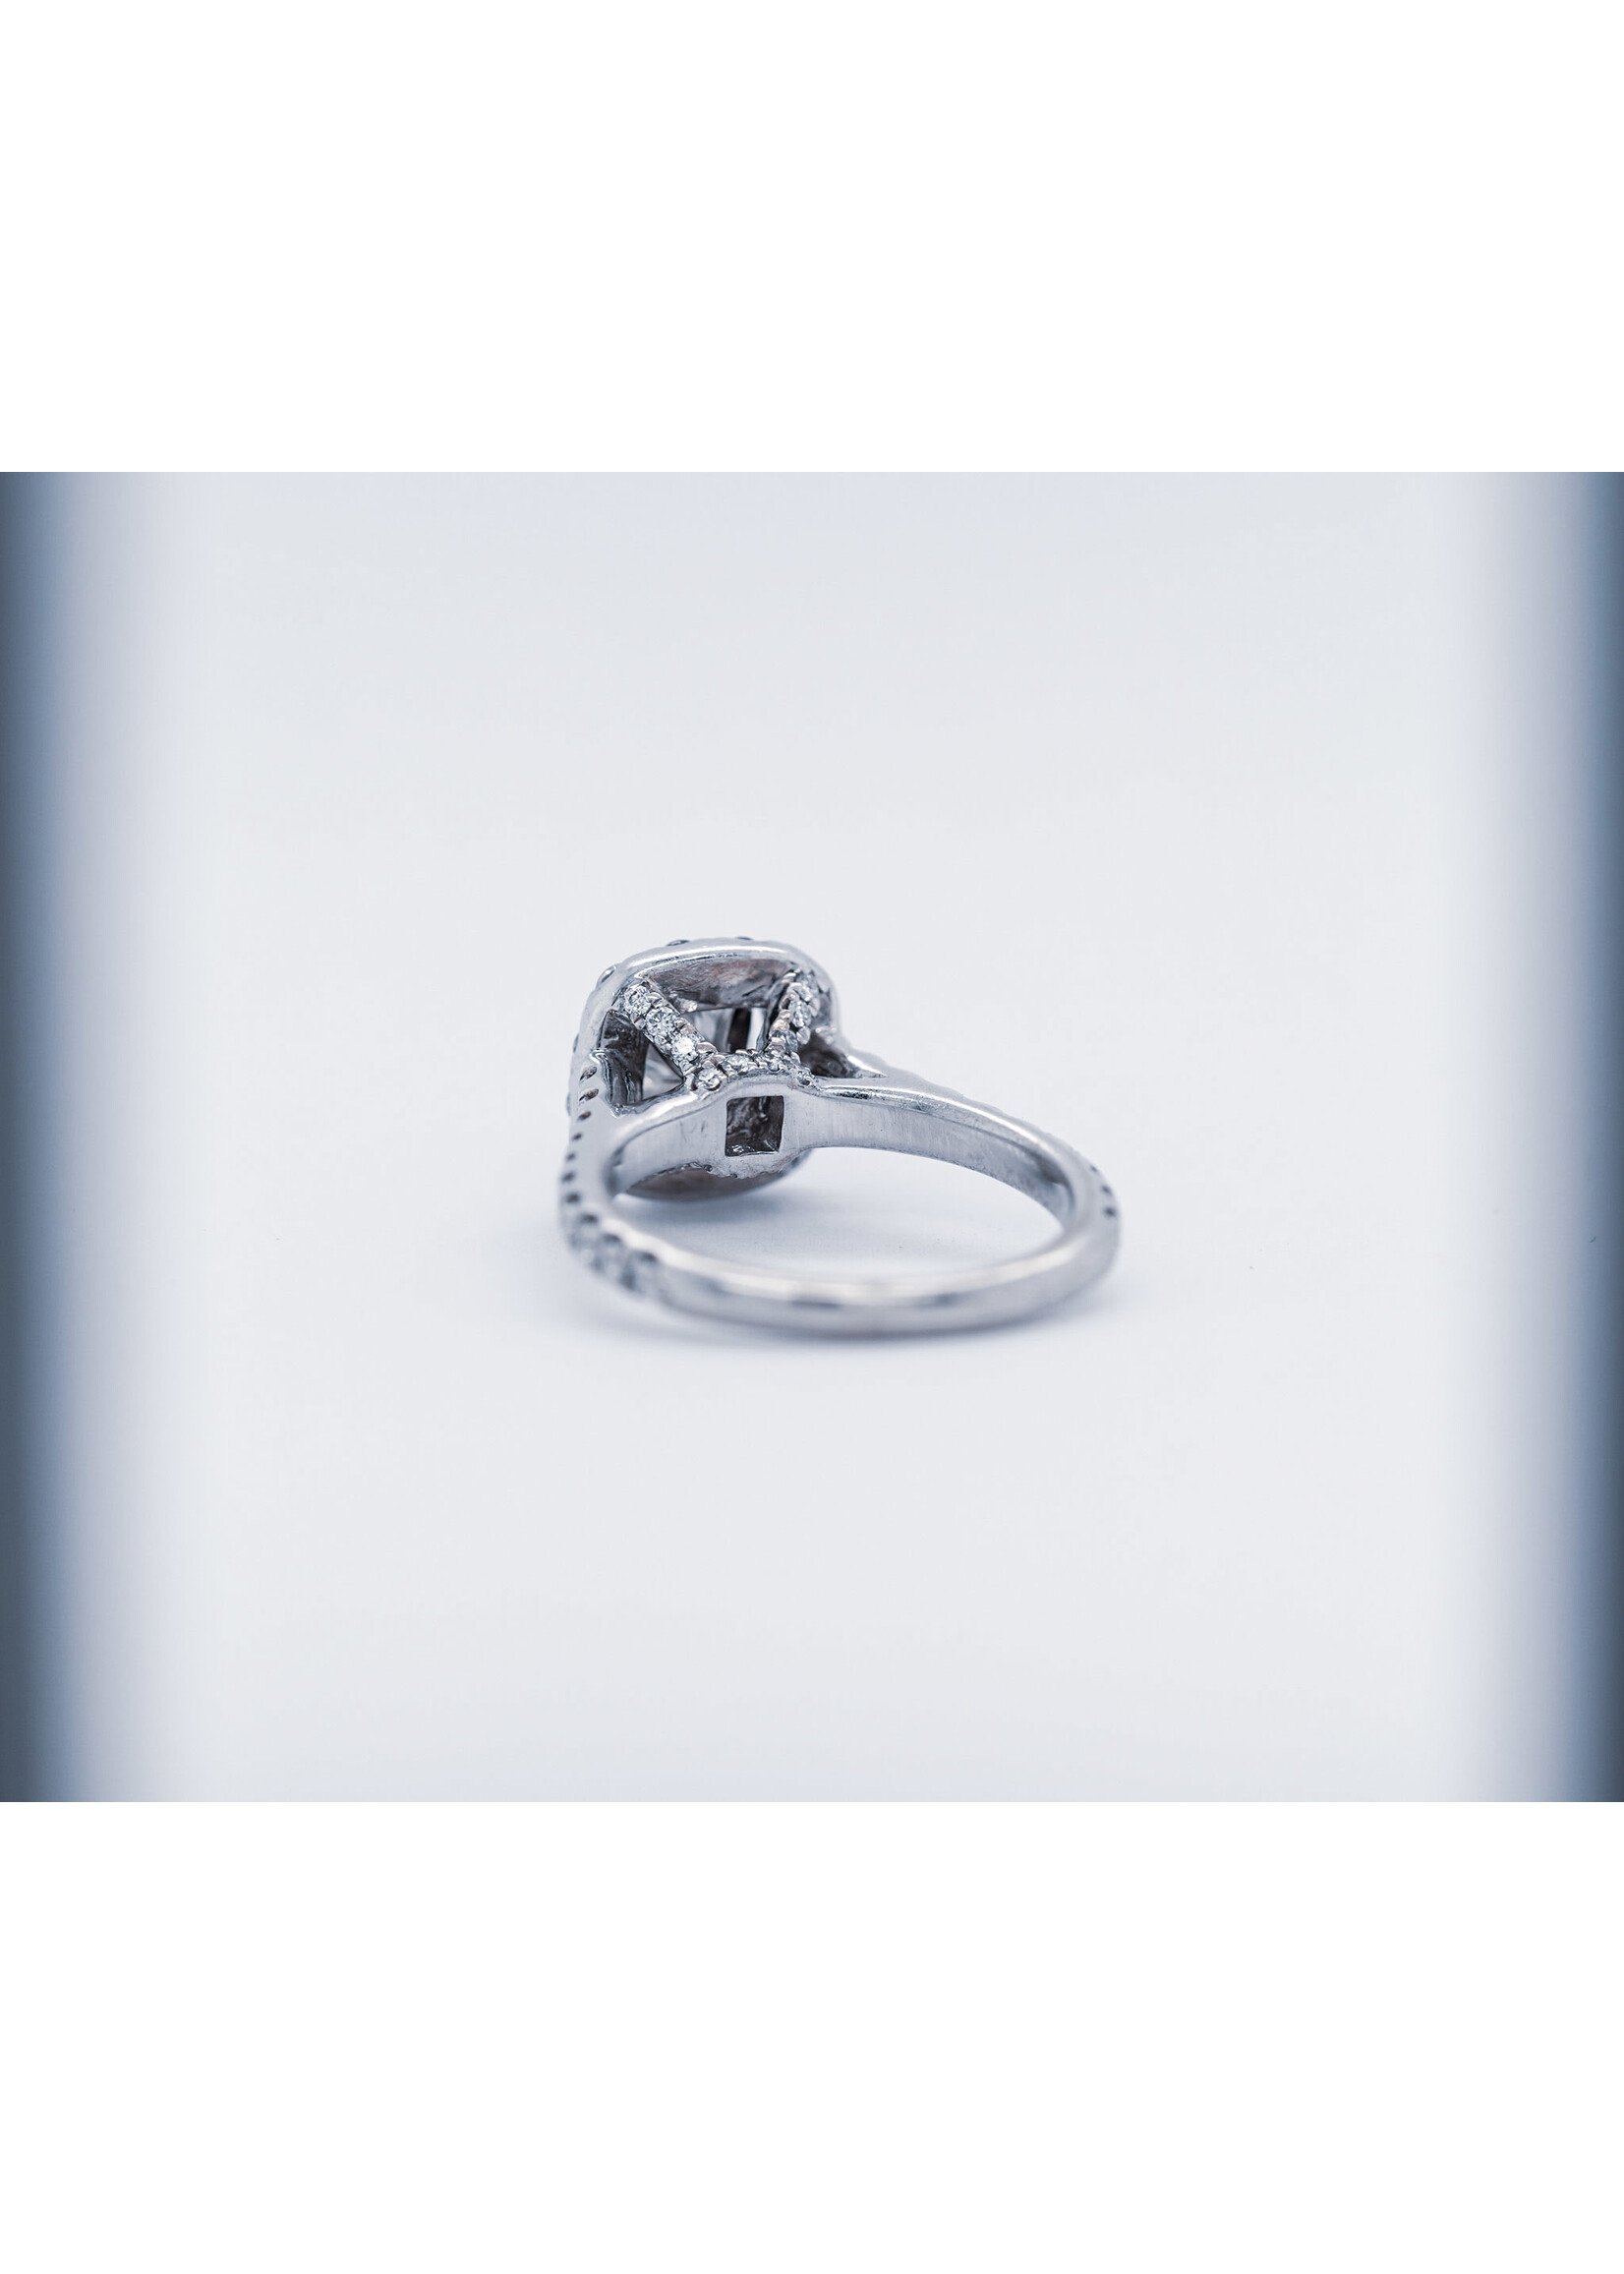 14KW 4.03g 1.50TW (.55ctr) H/I1 Round Diamond Neil Lane Engagement Ring (size 5)